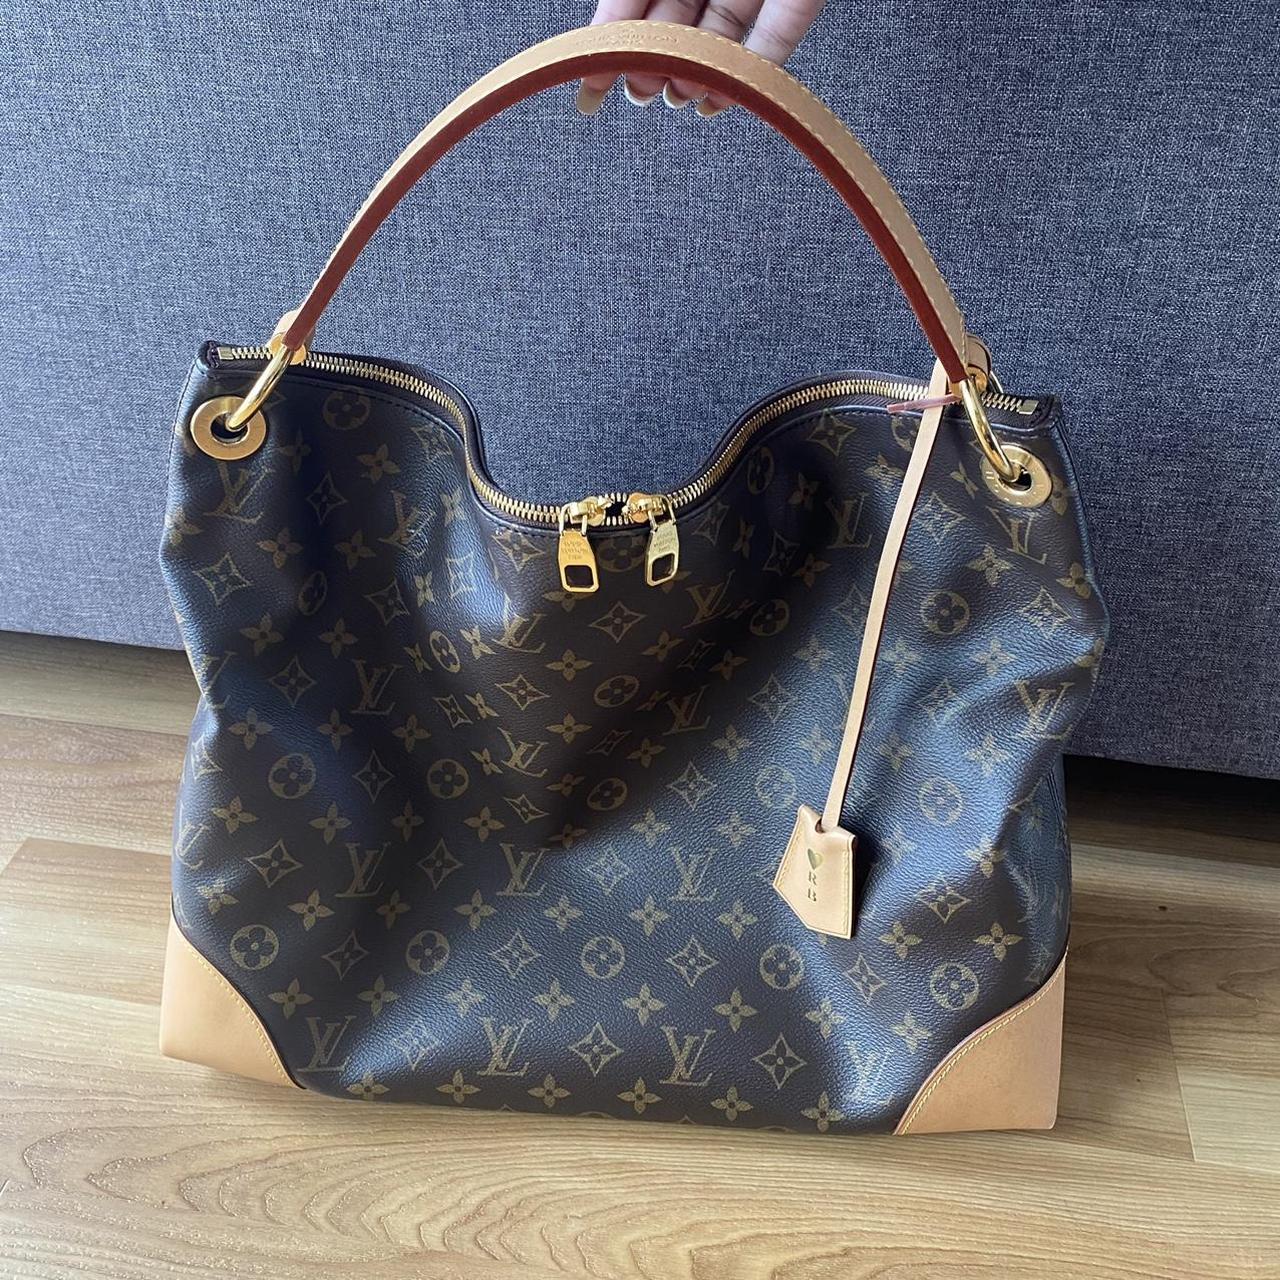 Authentic Louis Vuitton gift bag Great condition - Depop